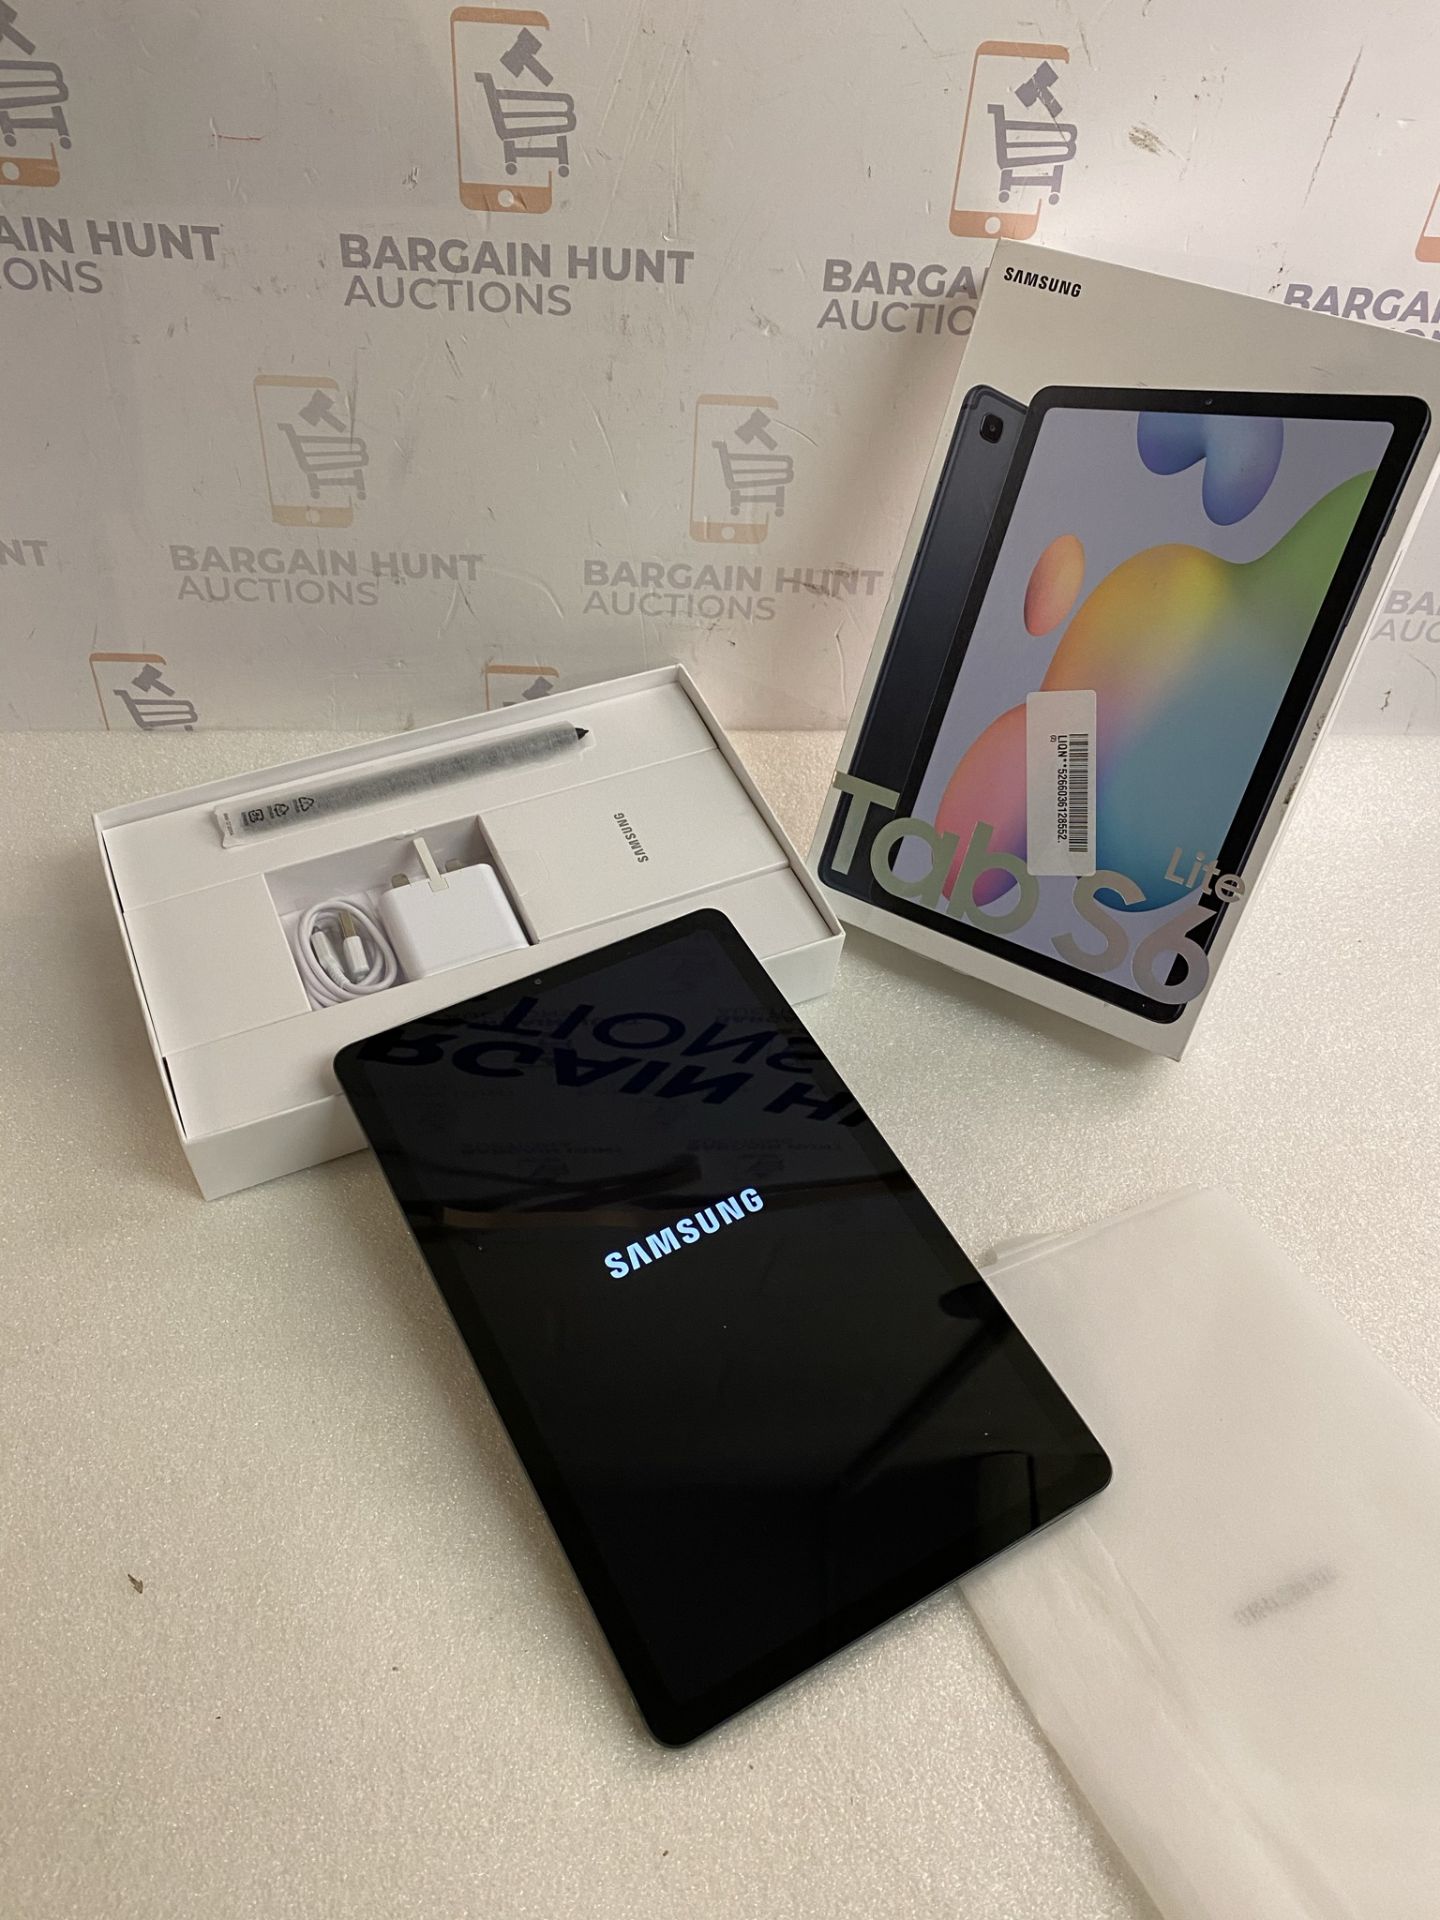 Samsung Galaxy 64GB Tab S6 Lite Wi-Fi - Oxford Grey RRP £269 - Image 3 of 3